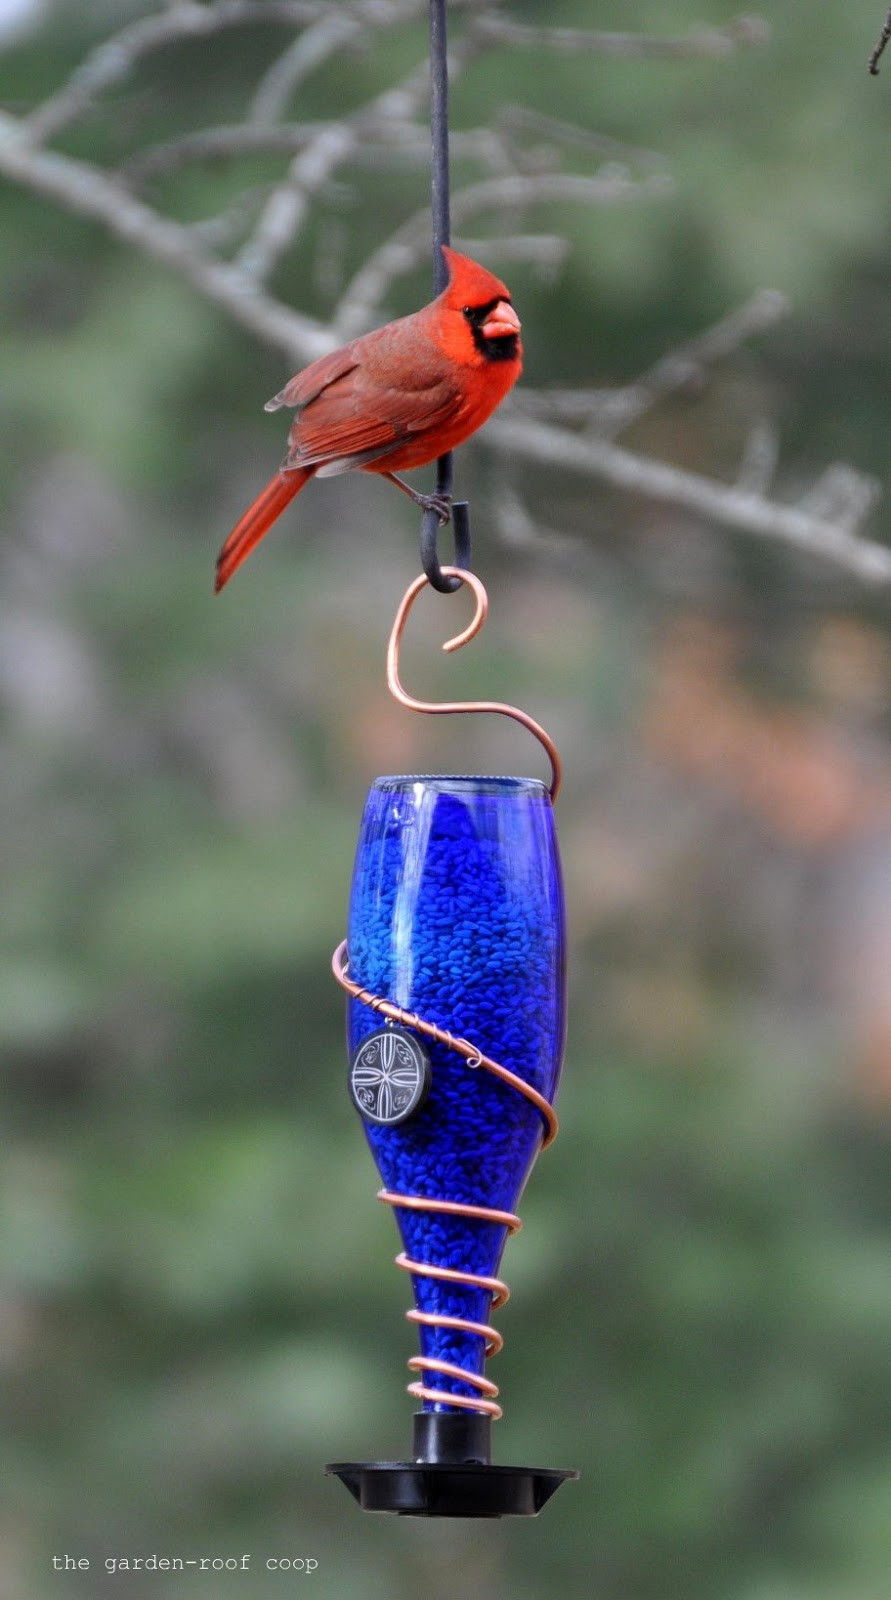 Best ideas about DIY Bird Feeders
. Save or Pin the garden roof coop DIY Glass Bottle Bird Feeders Now.